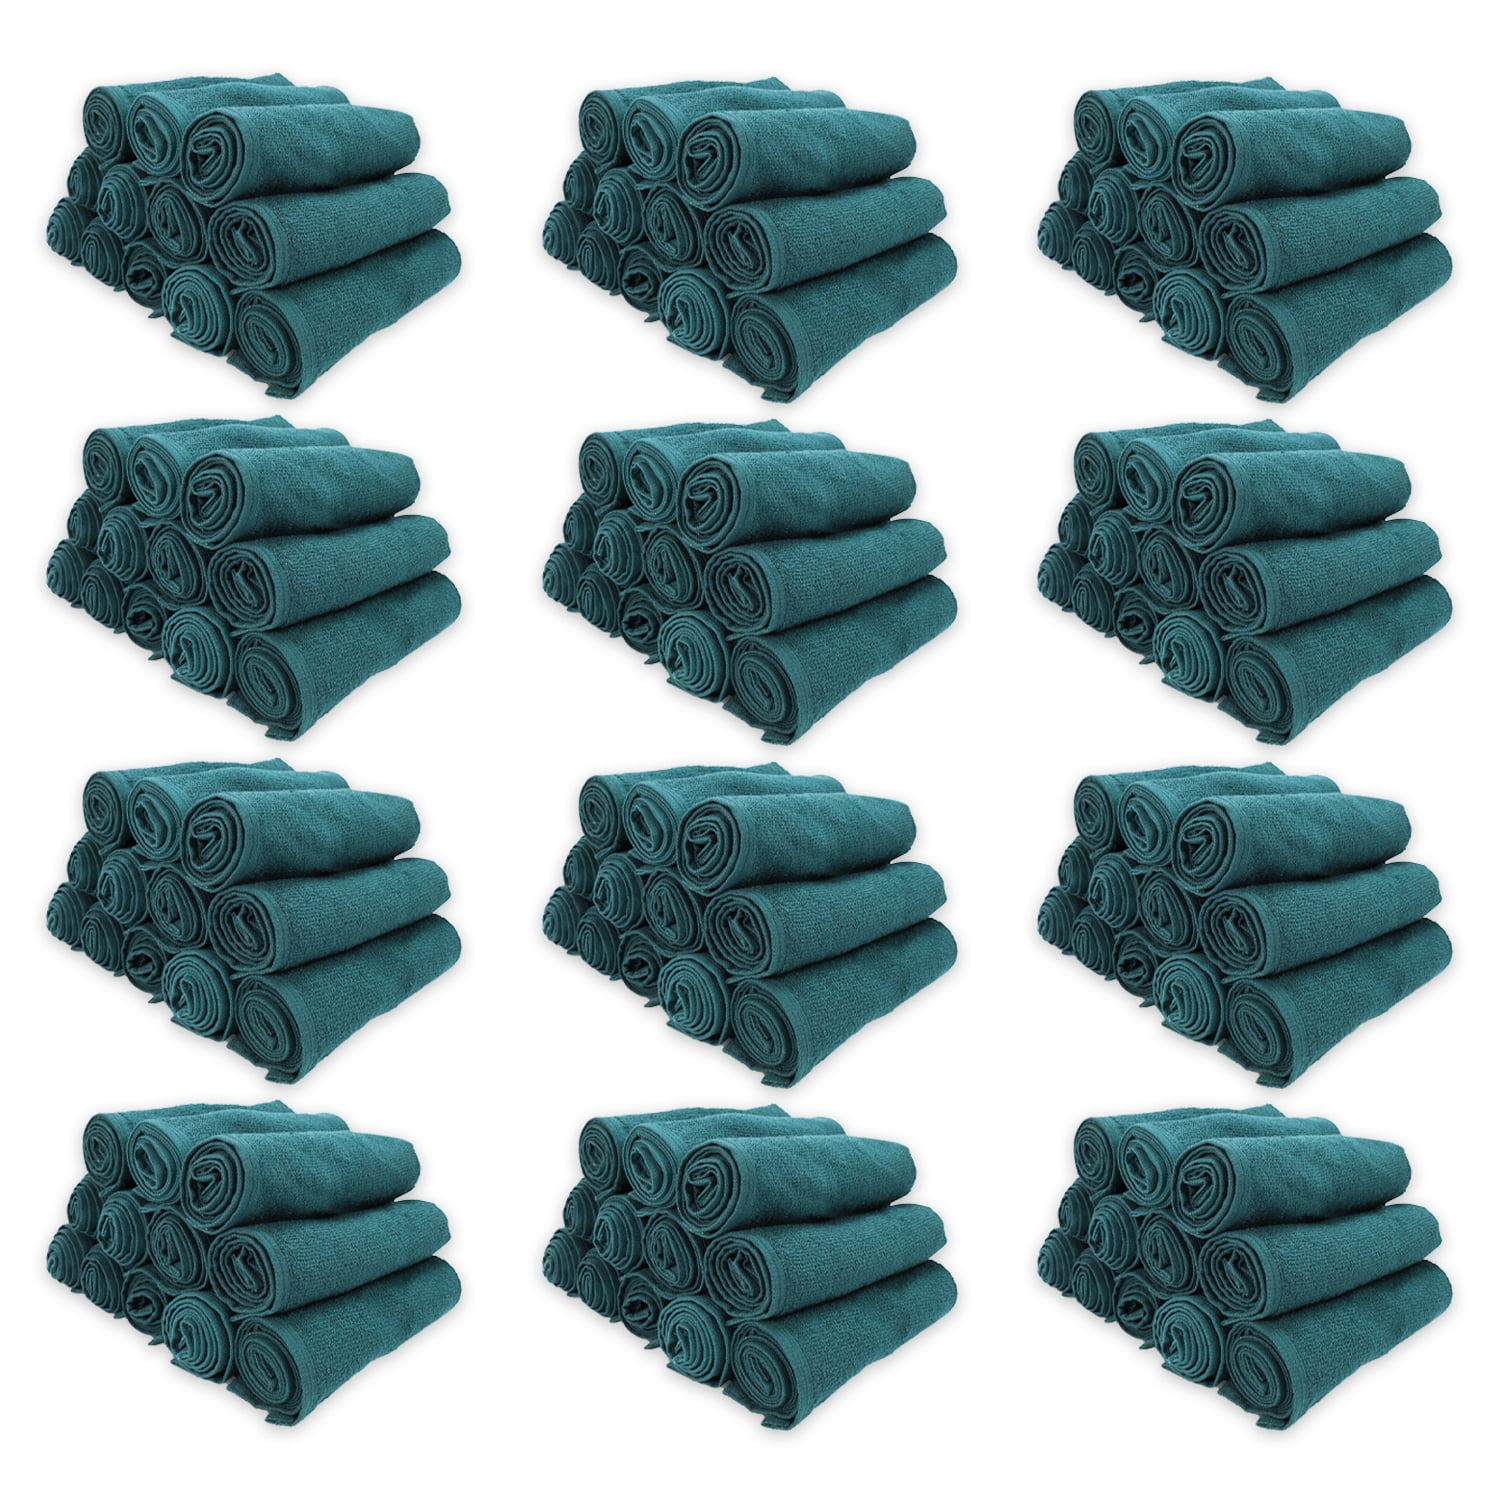 16x28 Bleach Resistant Towels - Texon Athletic Towel